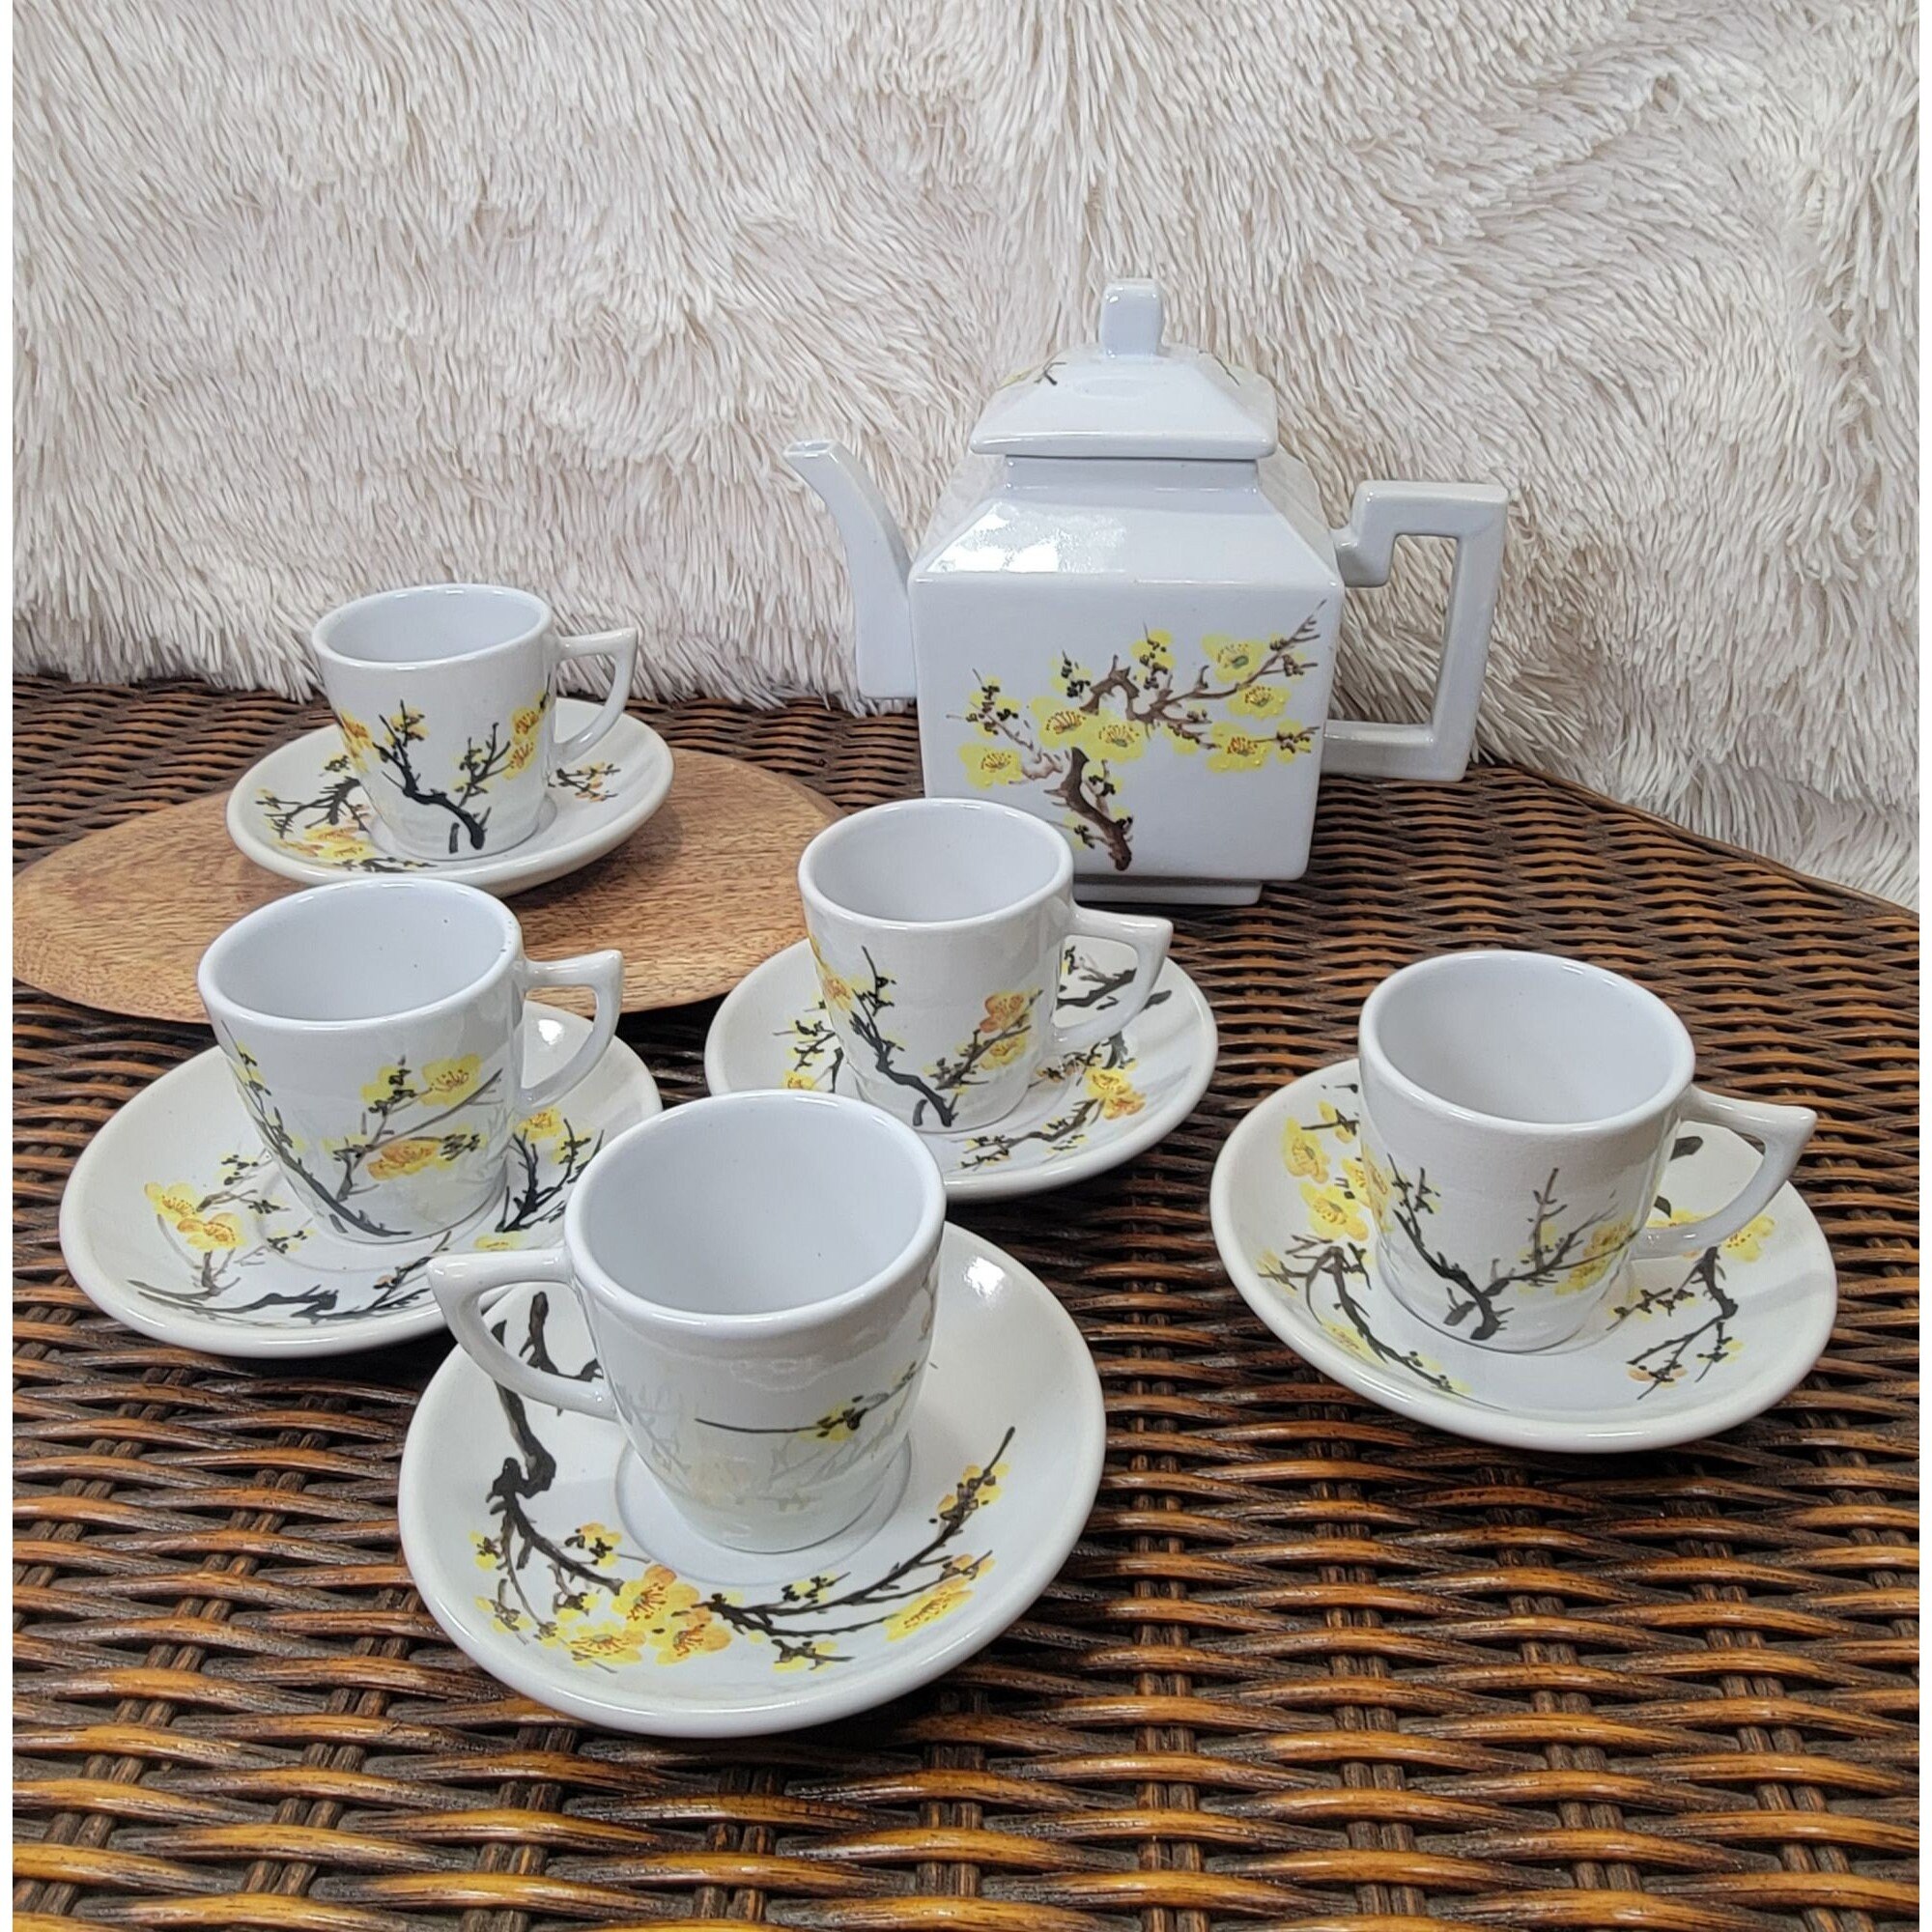 Portable travel tea set cherry blossom ceramic teapot with teacups